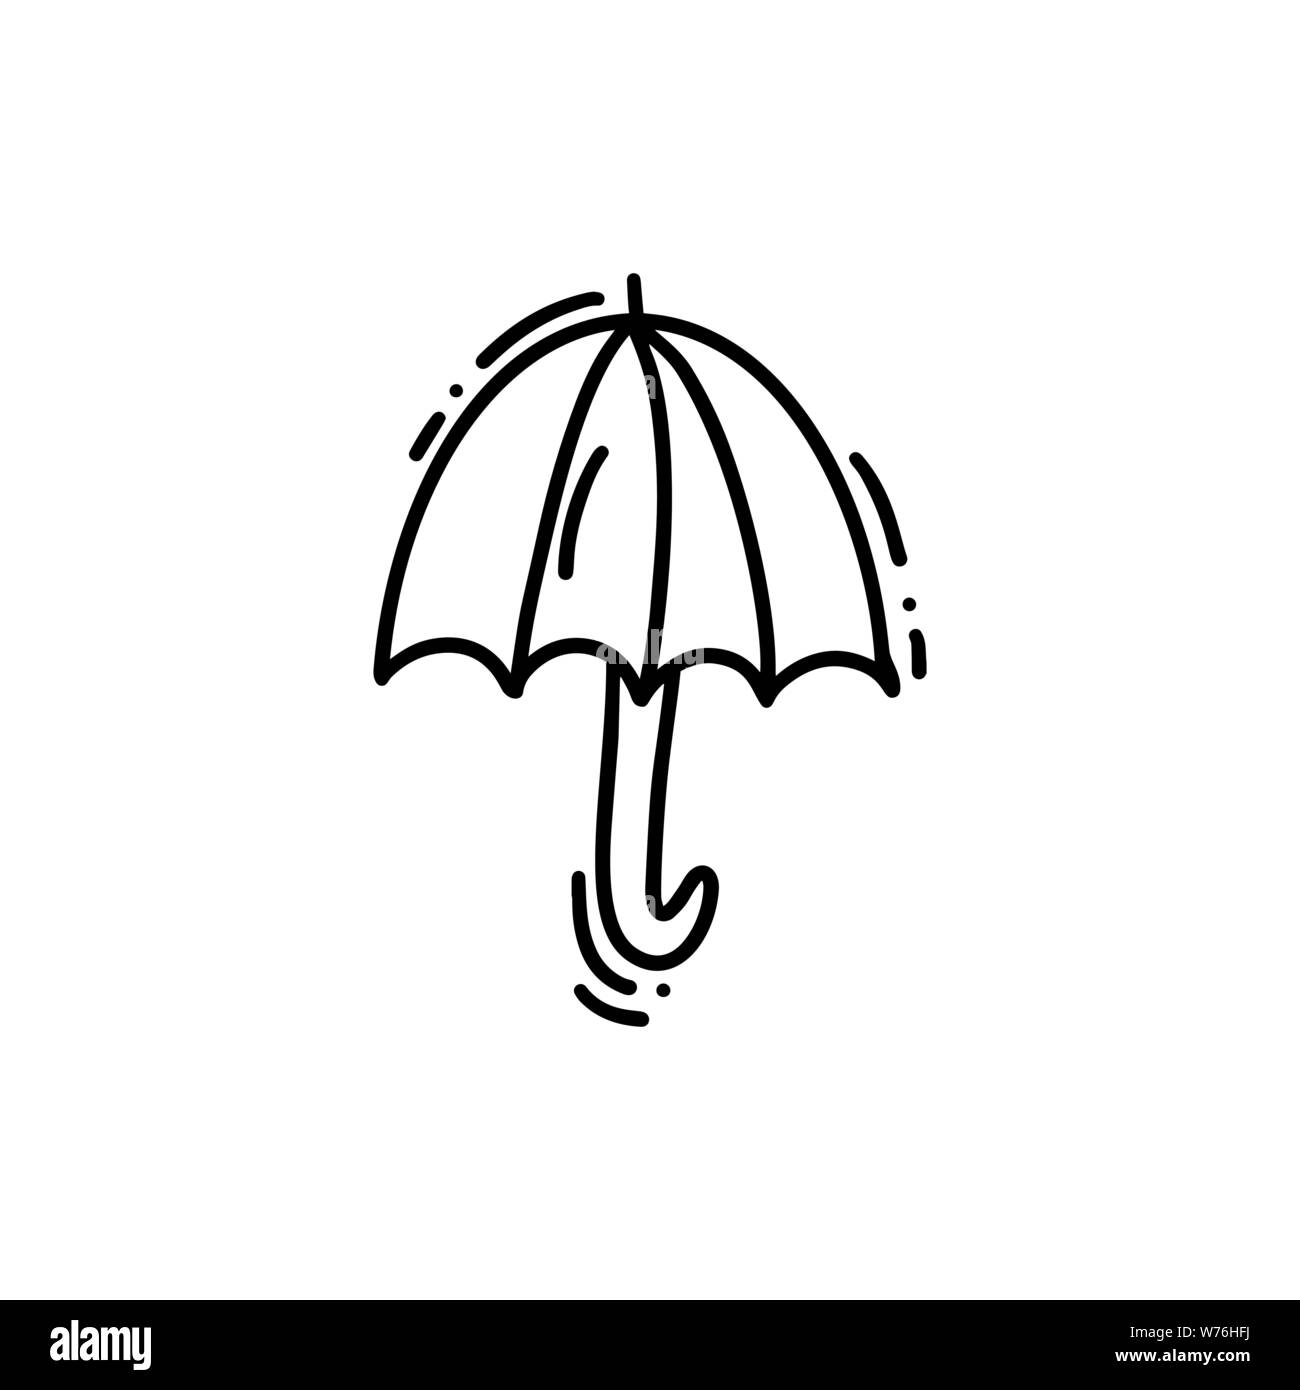 Icon of monoline cartoon umbrella. Hand drawn vector doodle logo illustration. Sketch isolated on white background Stock Vector